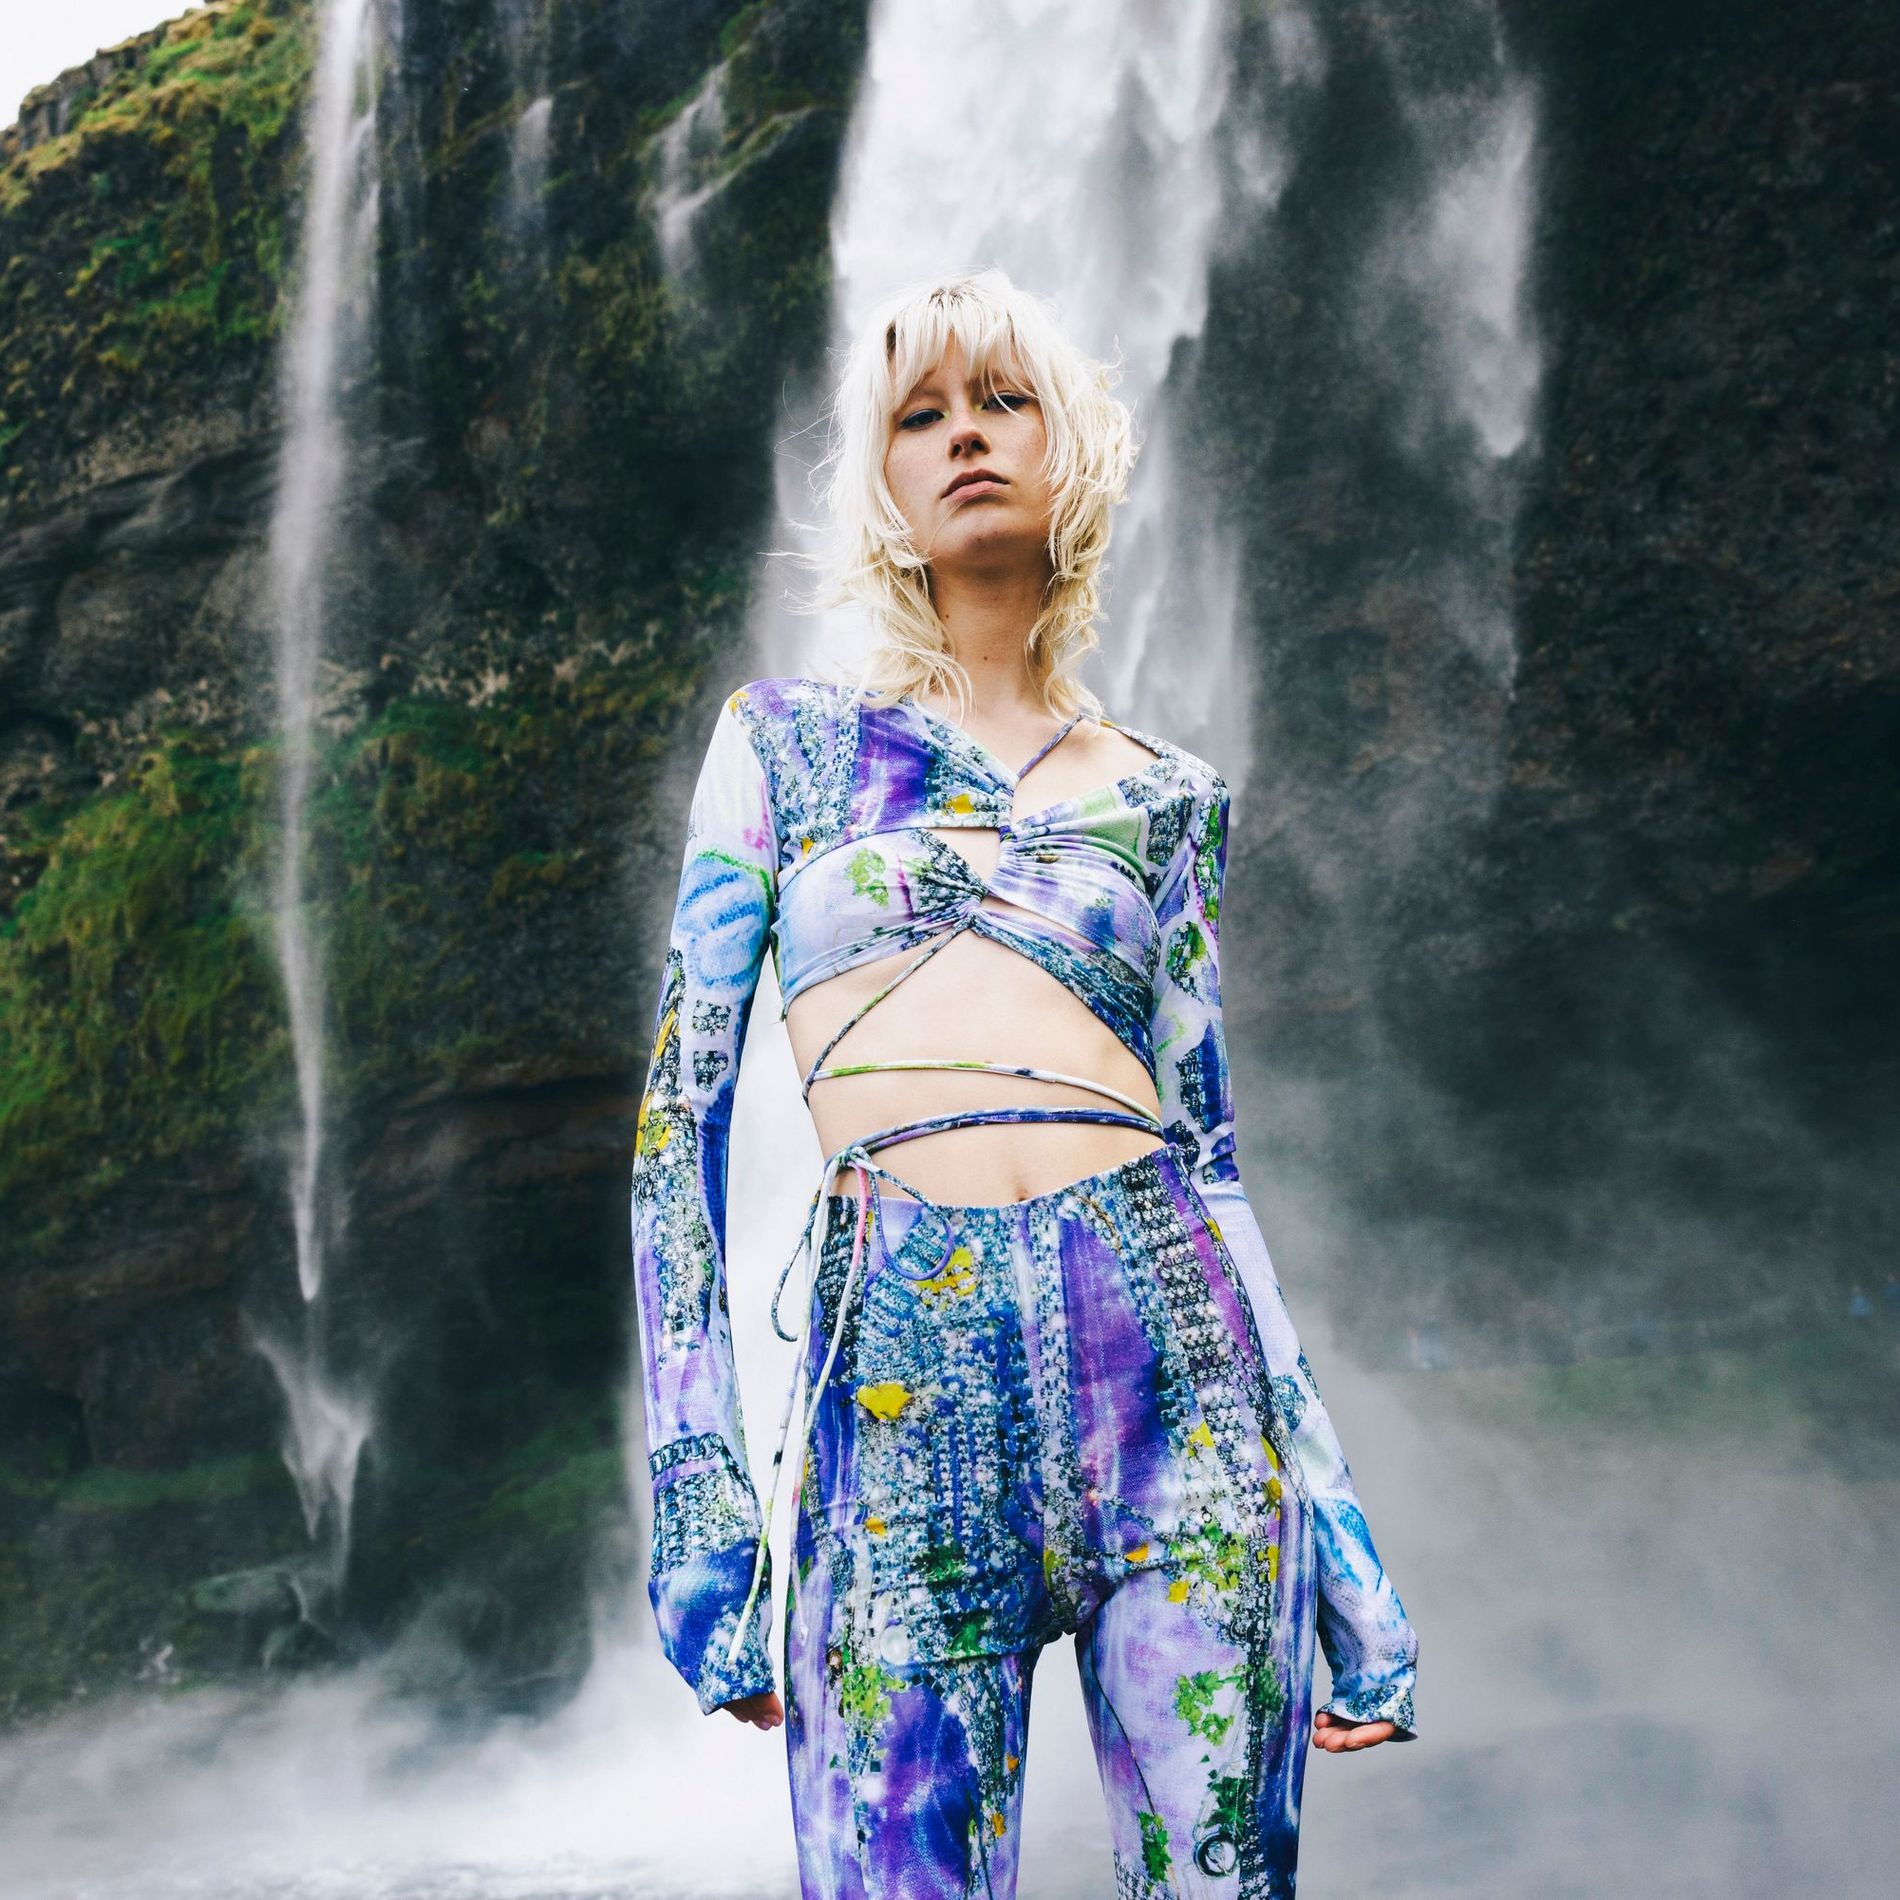 Icelandic designer Hildur Yeoman's looks have been seen on Kylie Jenner and Taylor Swift